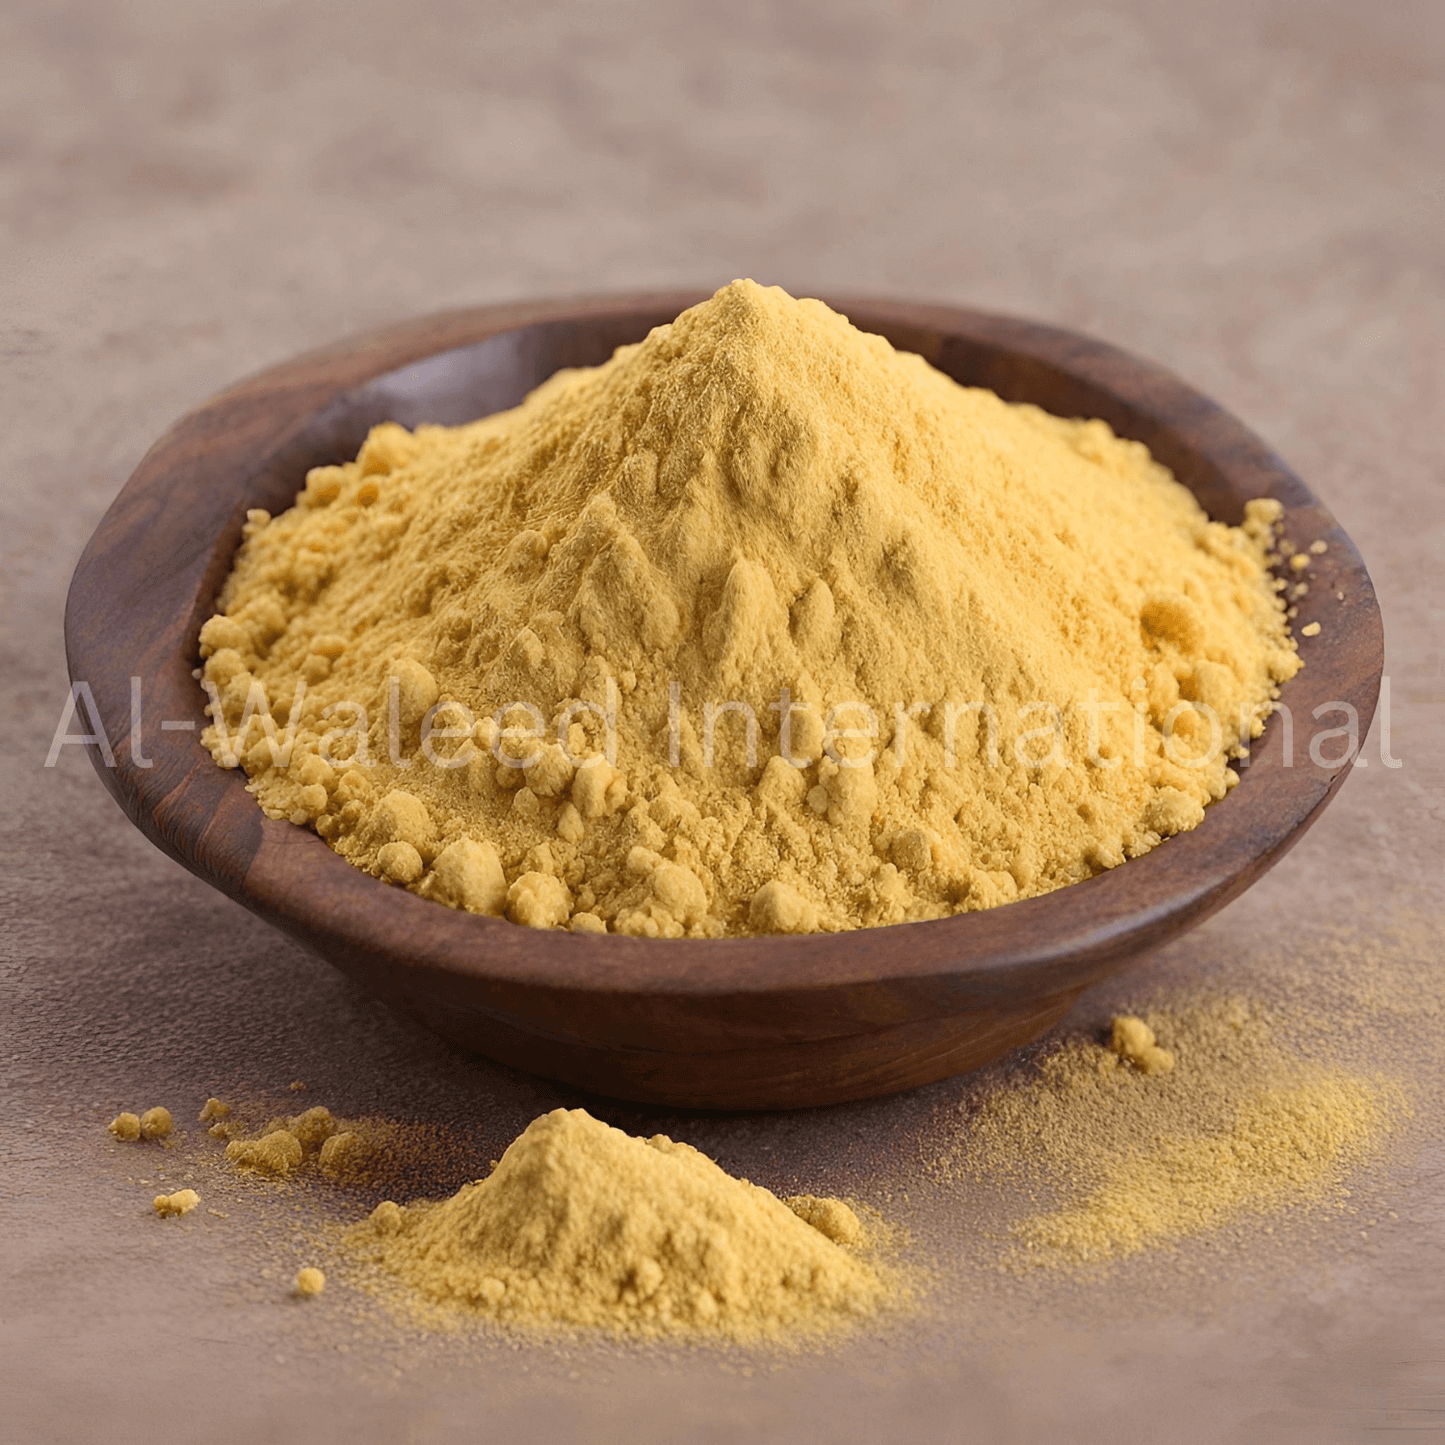 Asafoetida Powder (Asafoetida Gum 30% and Fenugreek Seeds 70%) - Al Waleed International